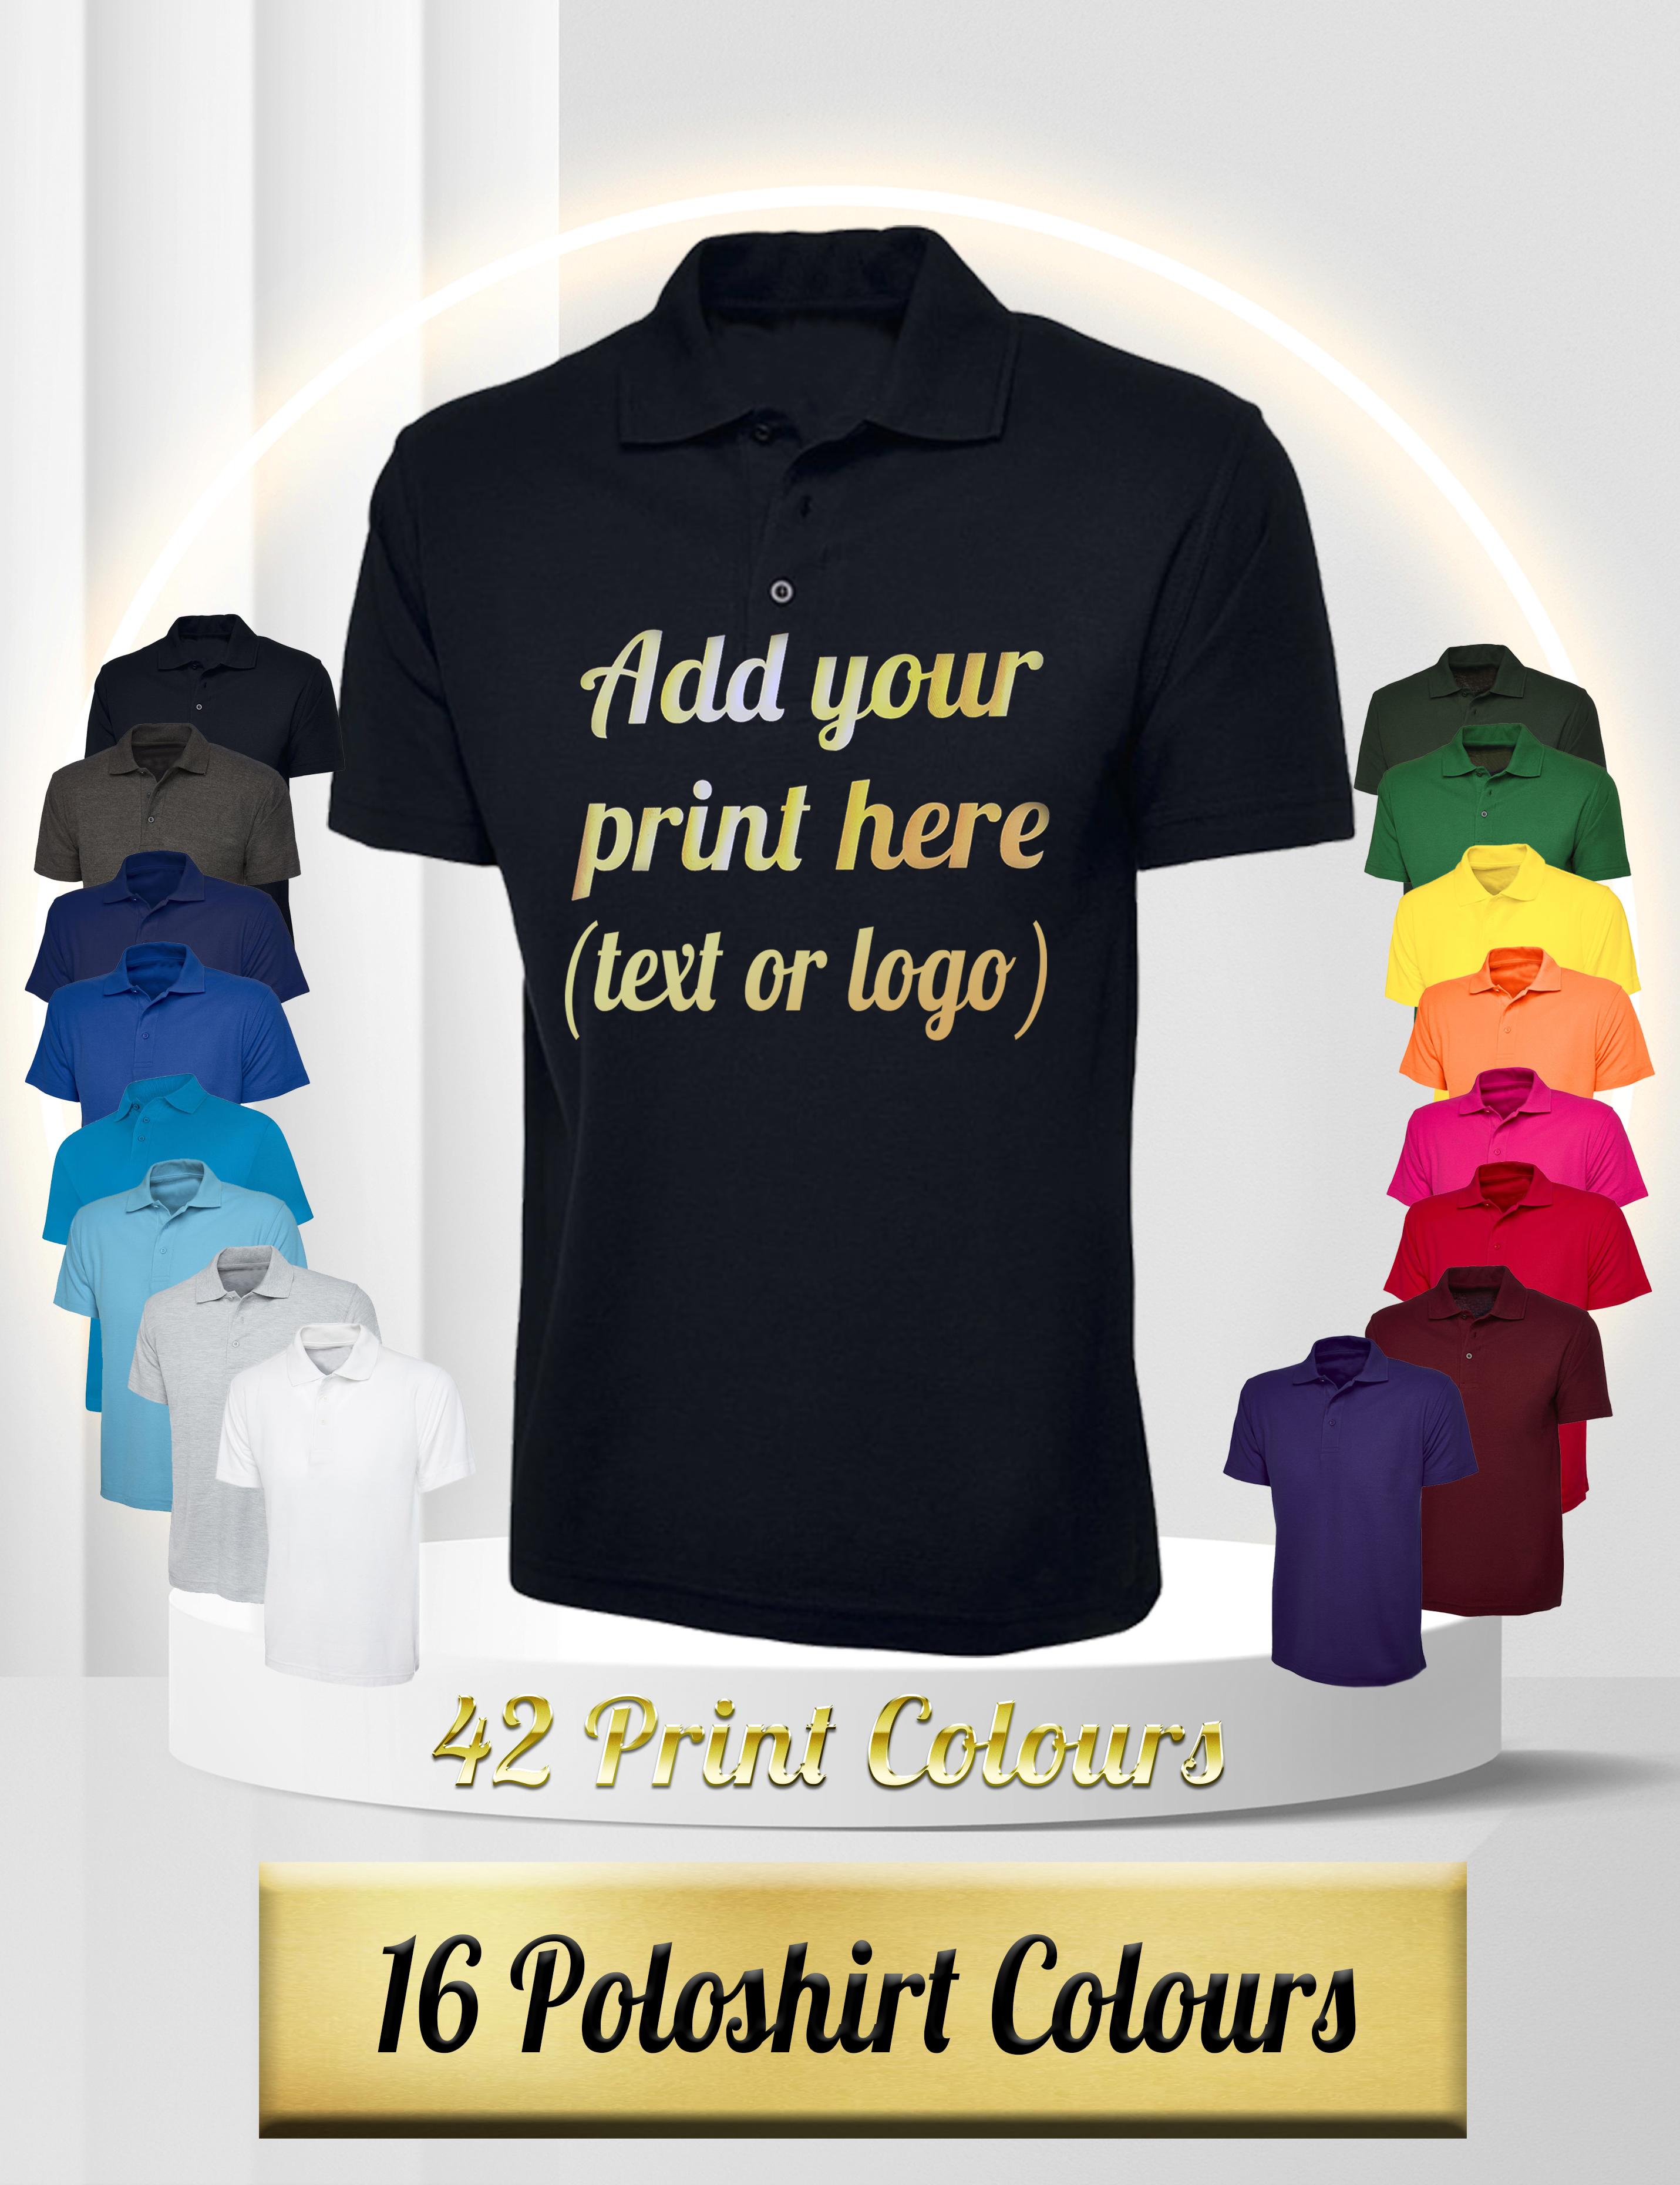 Full Colour Printed Polo Shirt colours